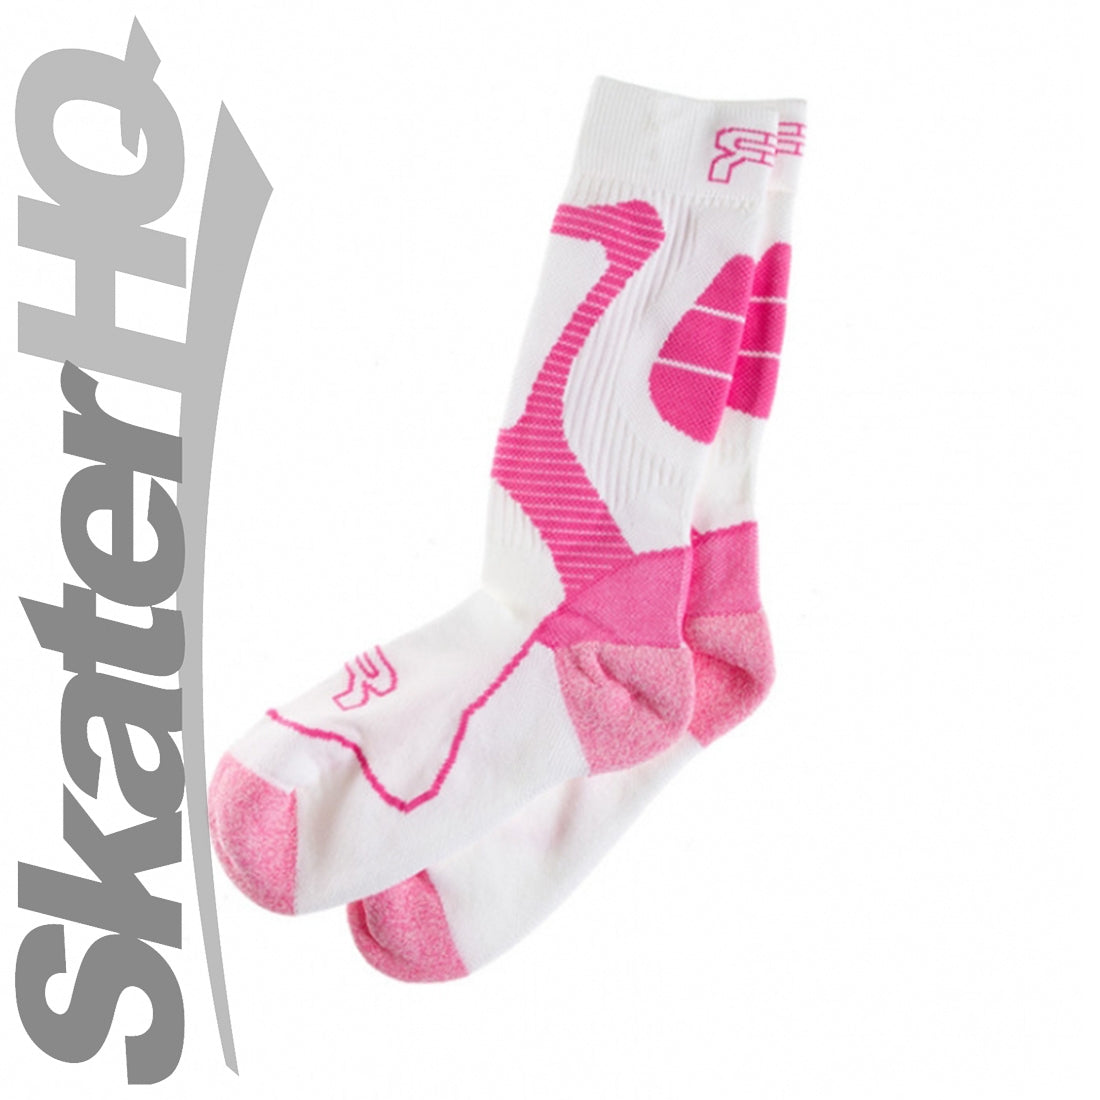 FR Nano Sport Socks Pink/White - Large - EU42-44 Apparel Socks